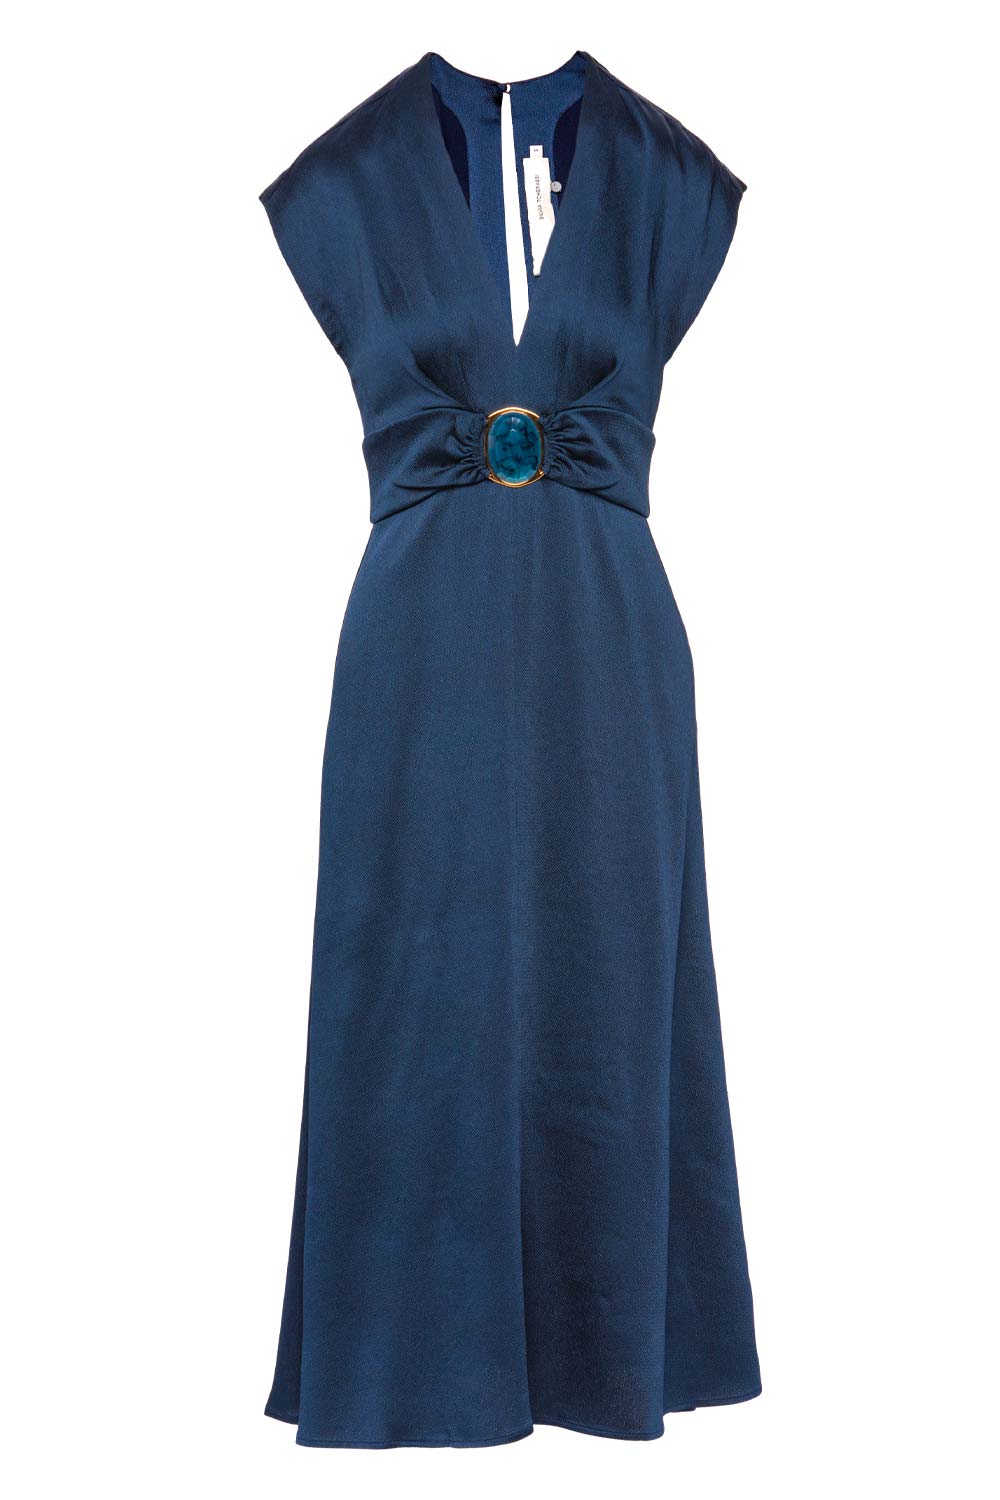 Silvia Tcherassi Emmeline Navy Stone Embellished Midi Dress